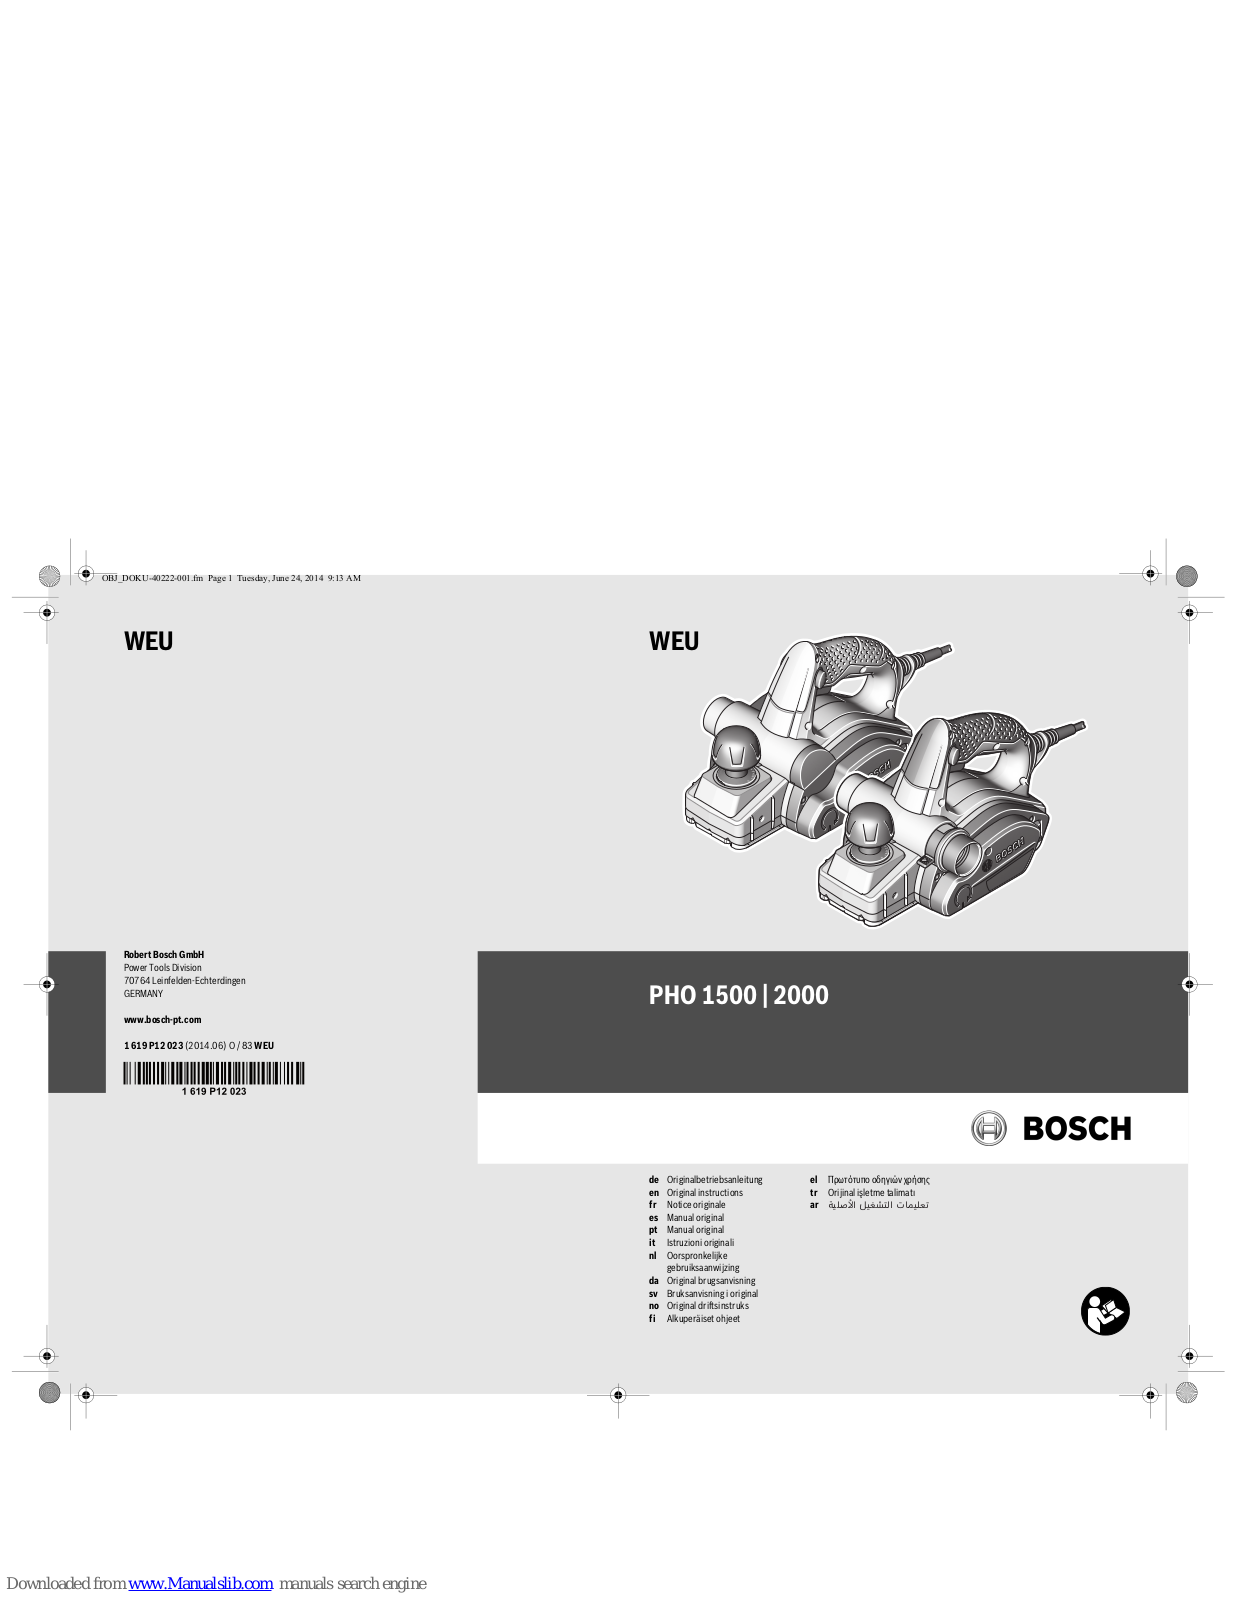 Bosch PHO 2000, PHO 1500, weu Original Instructions Manual